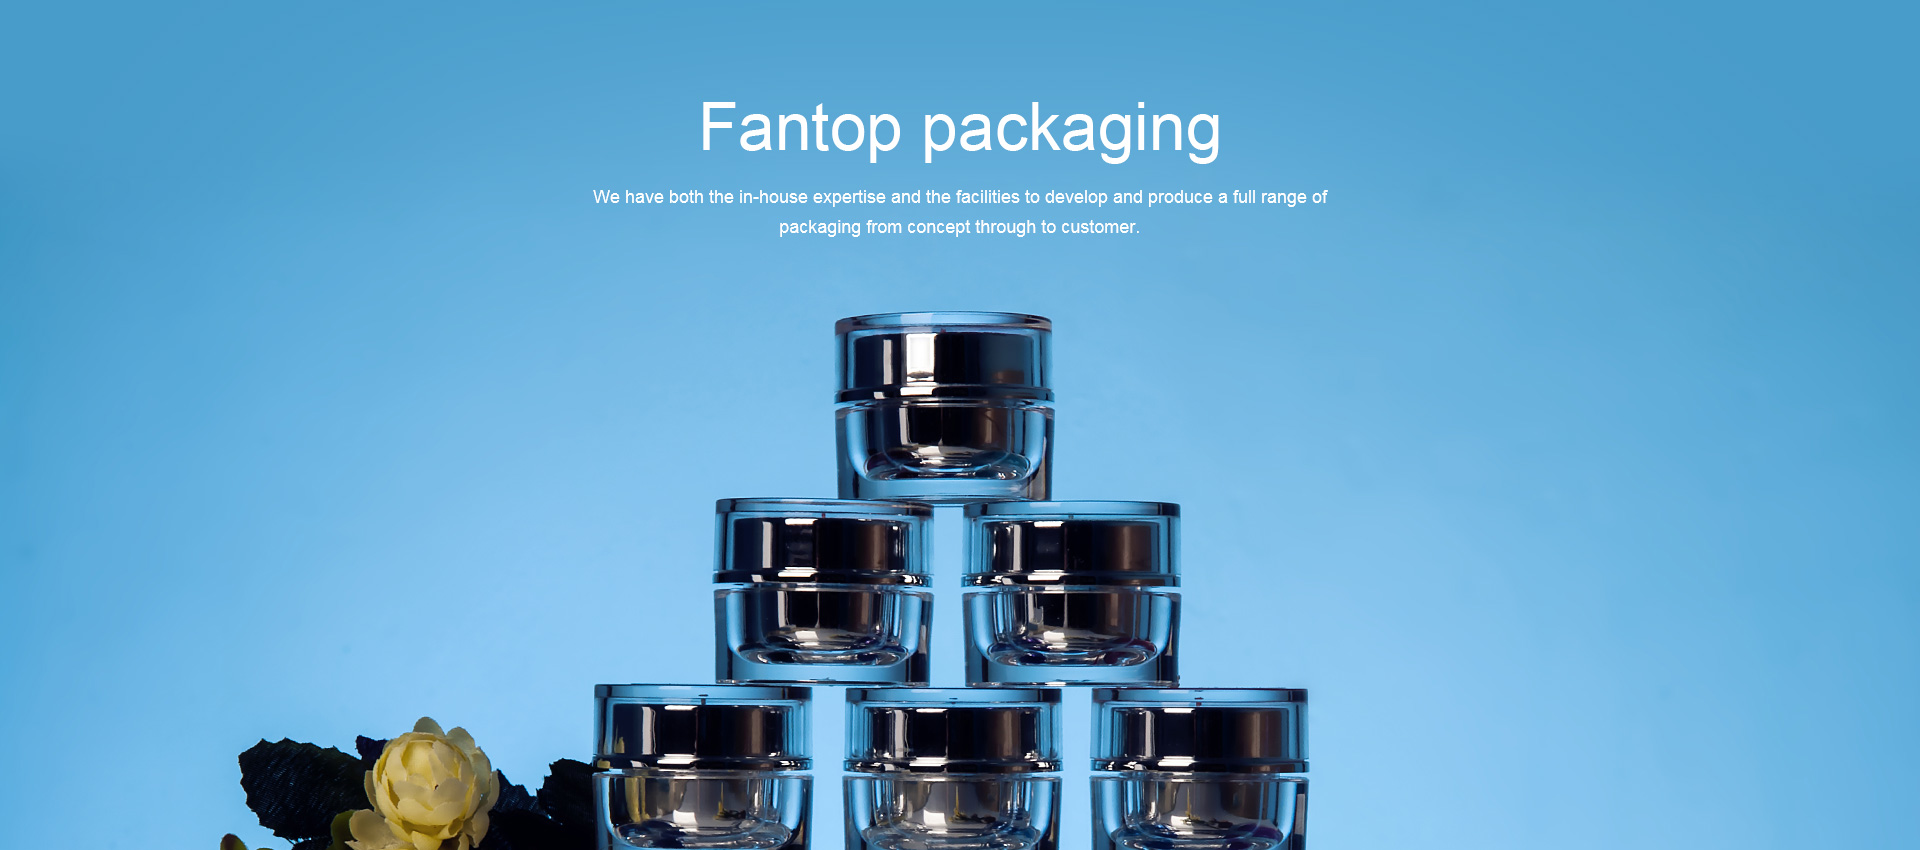 Fantop packaging